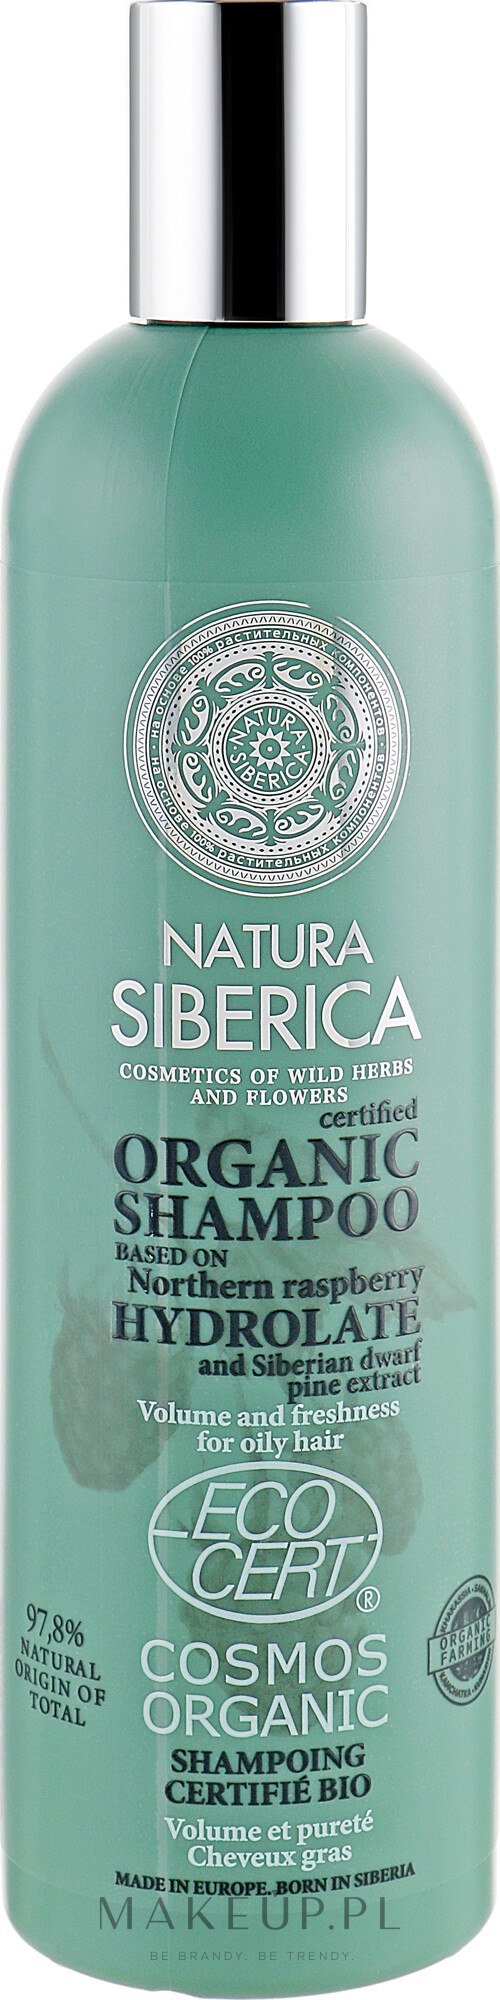 natura szampon